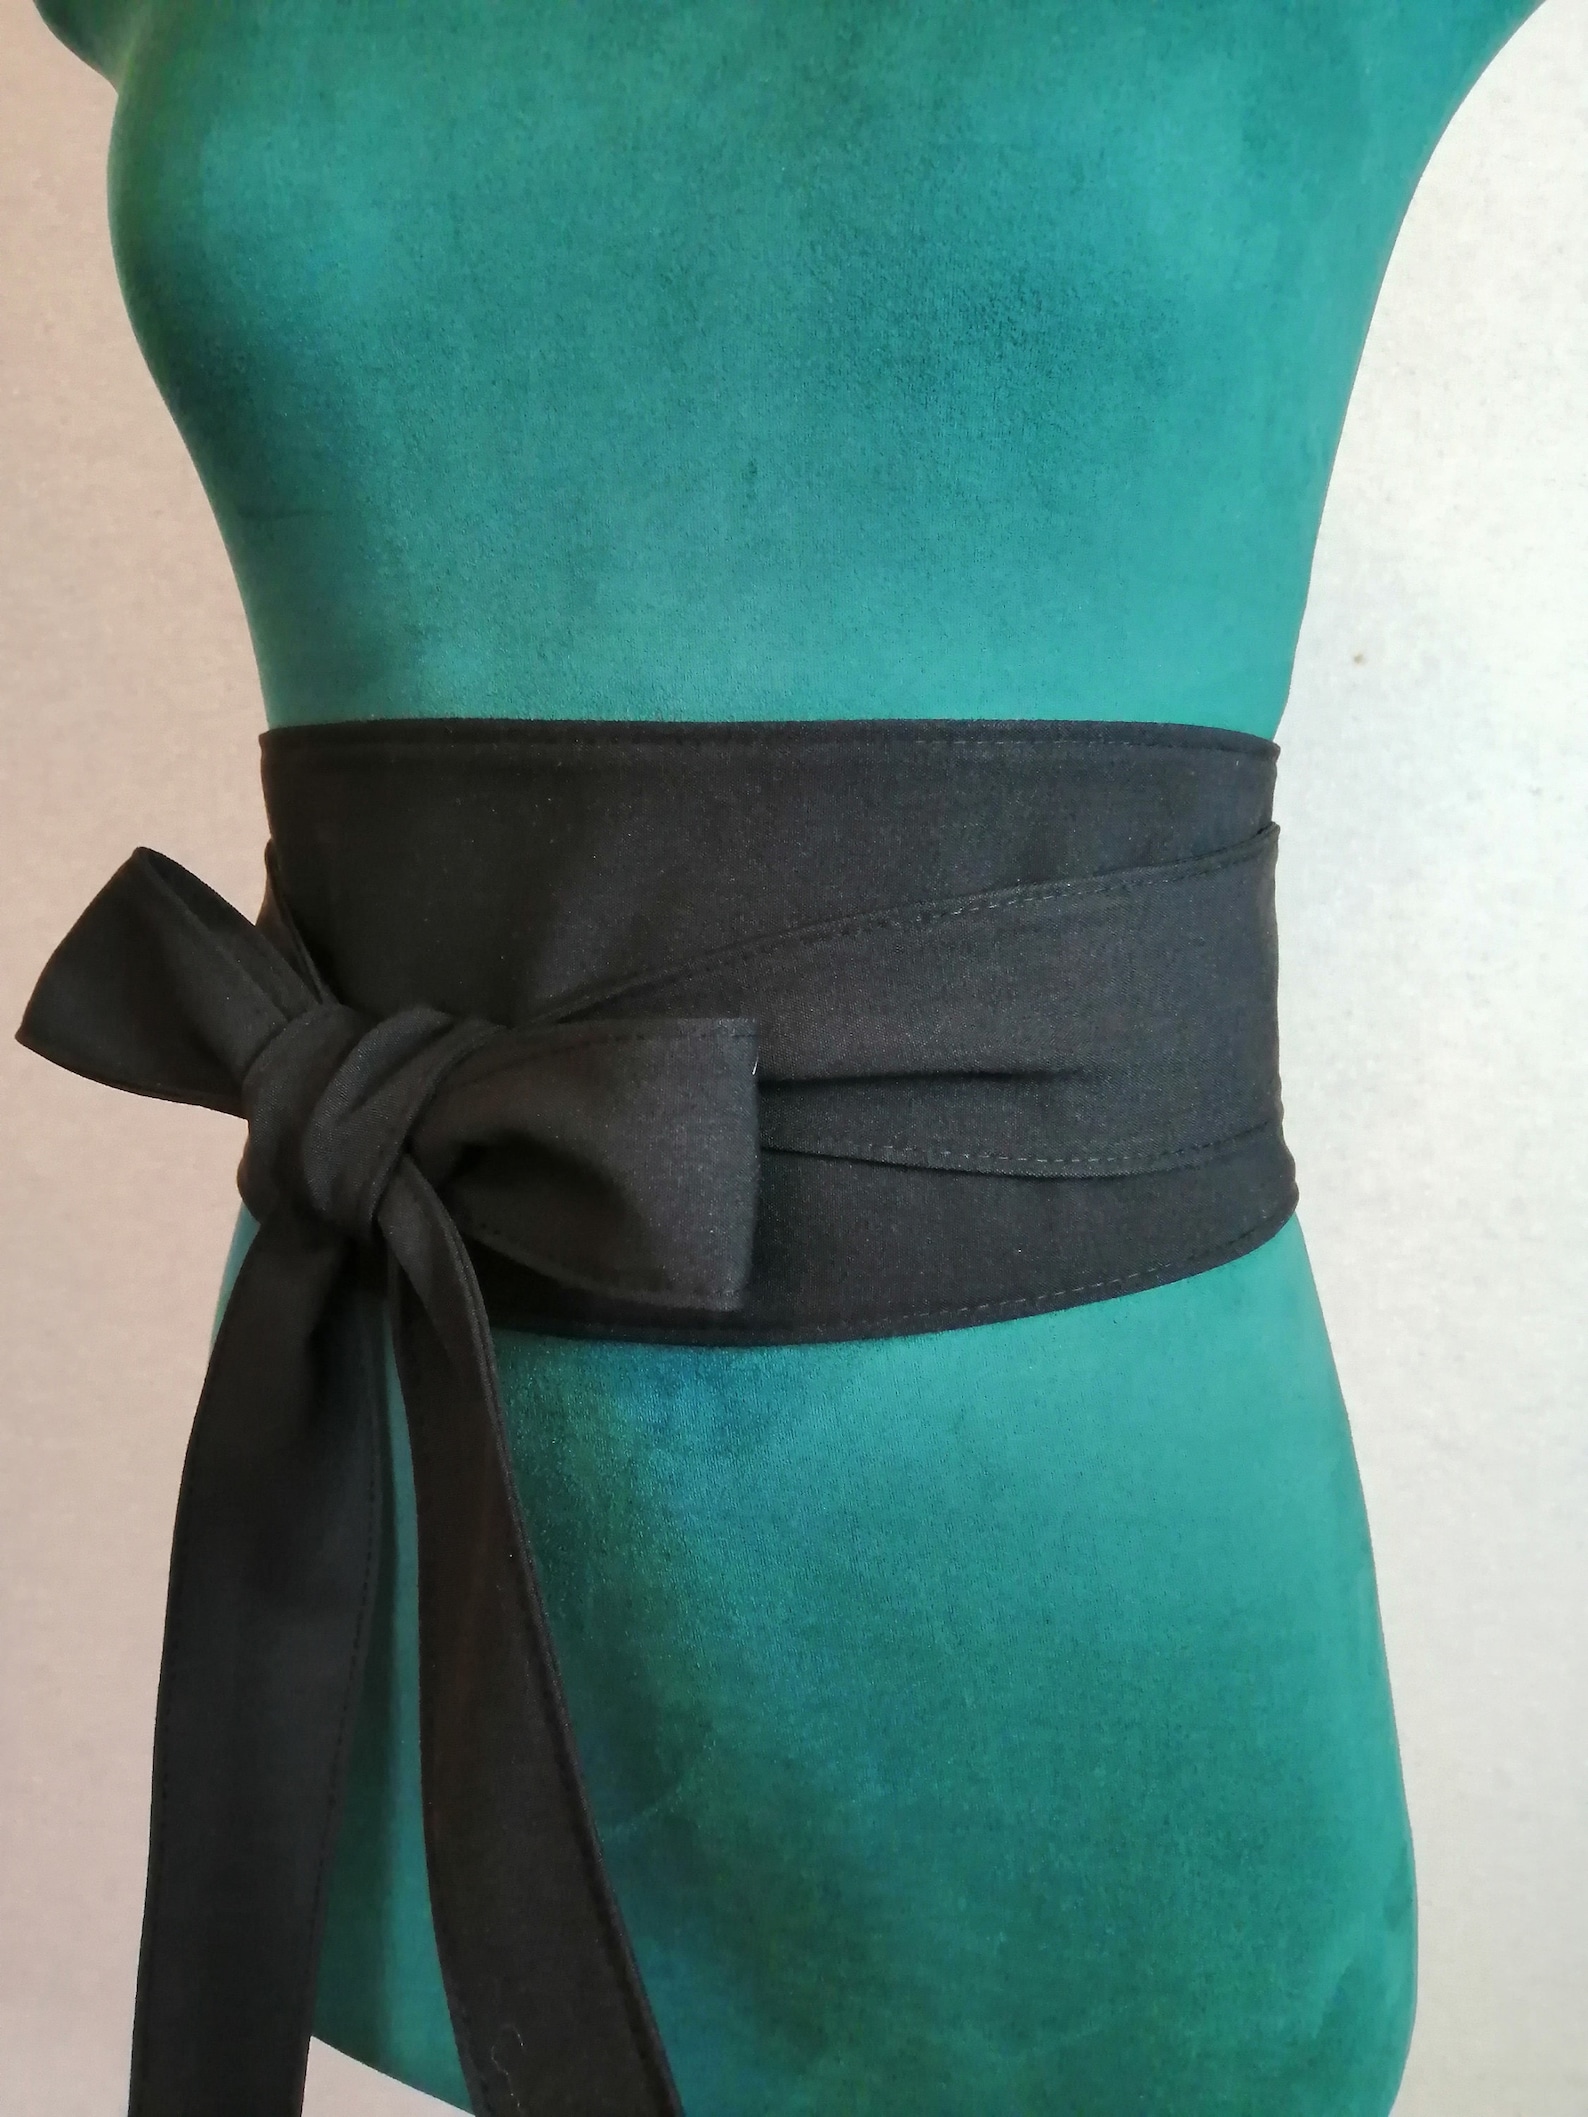 Black cloth sash casual women's Obi belt wide 033 | Etsy